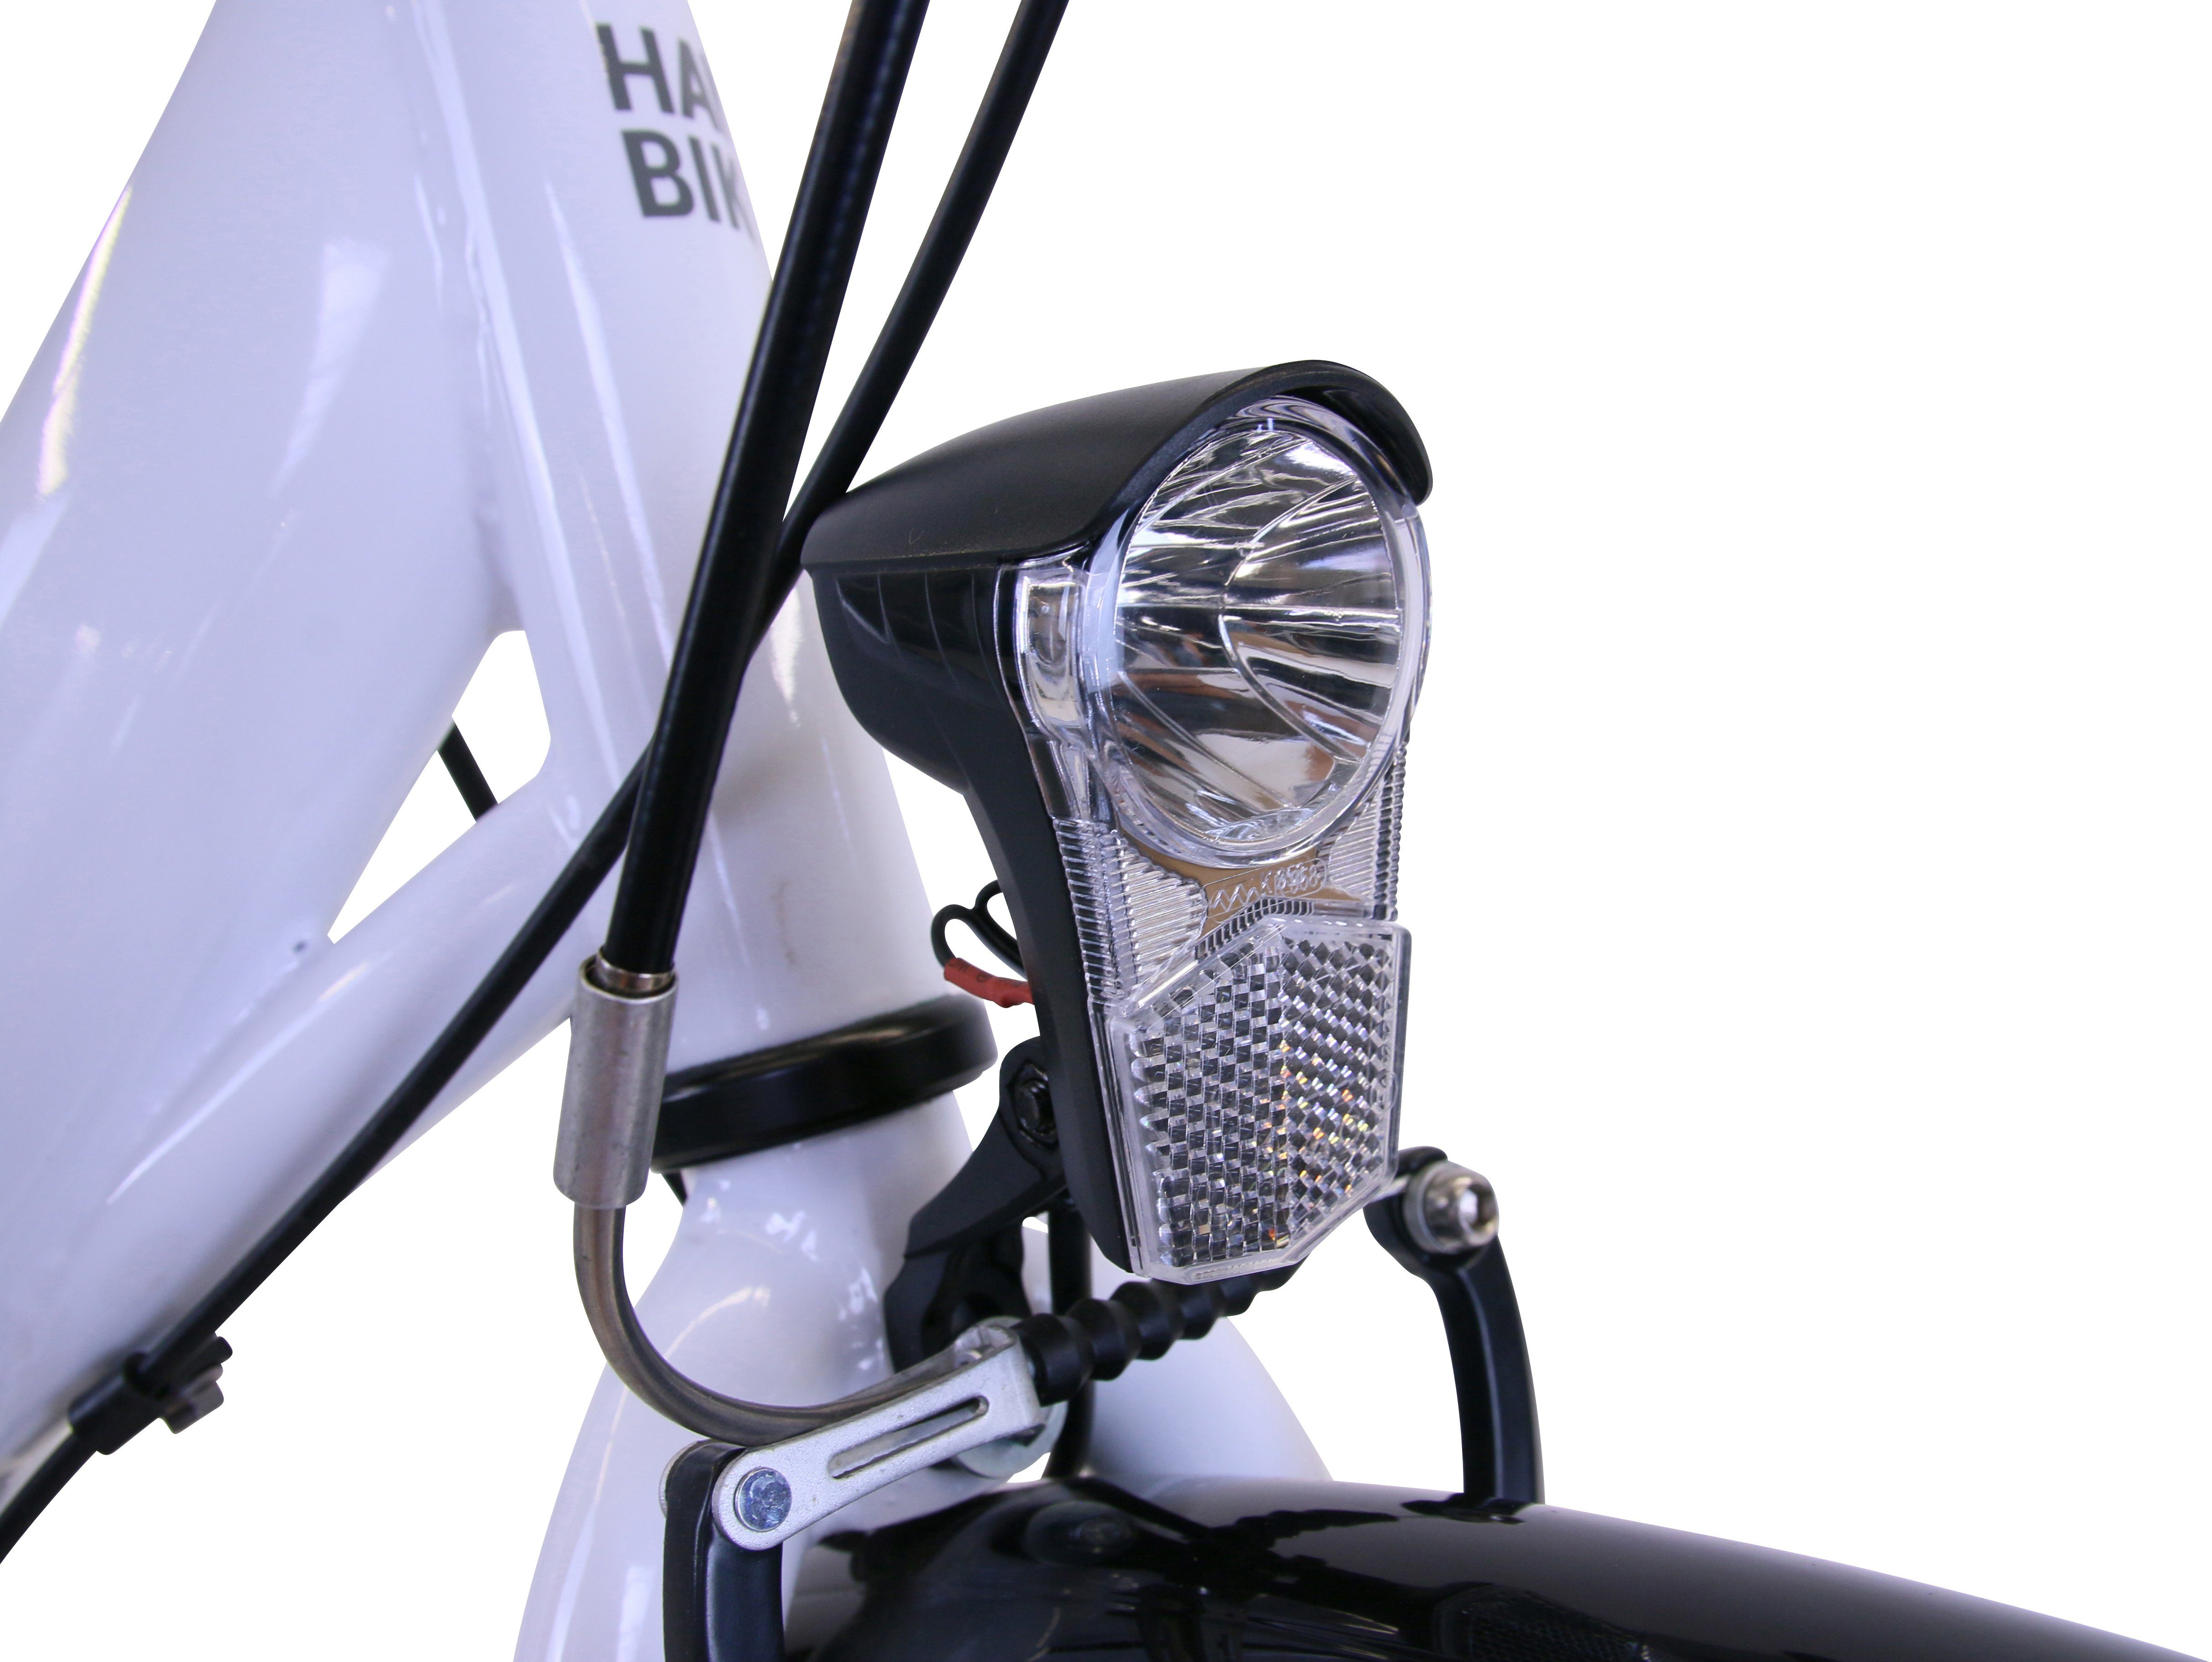 Nexus Plus 3 HAWK Shimano Cityrad Schaltwerk City White, Premium Bikes Wave HAWK Gang